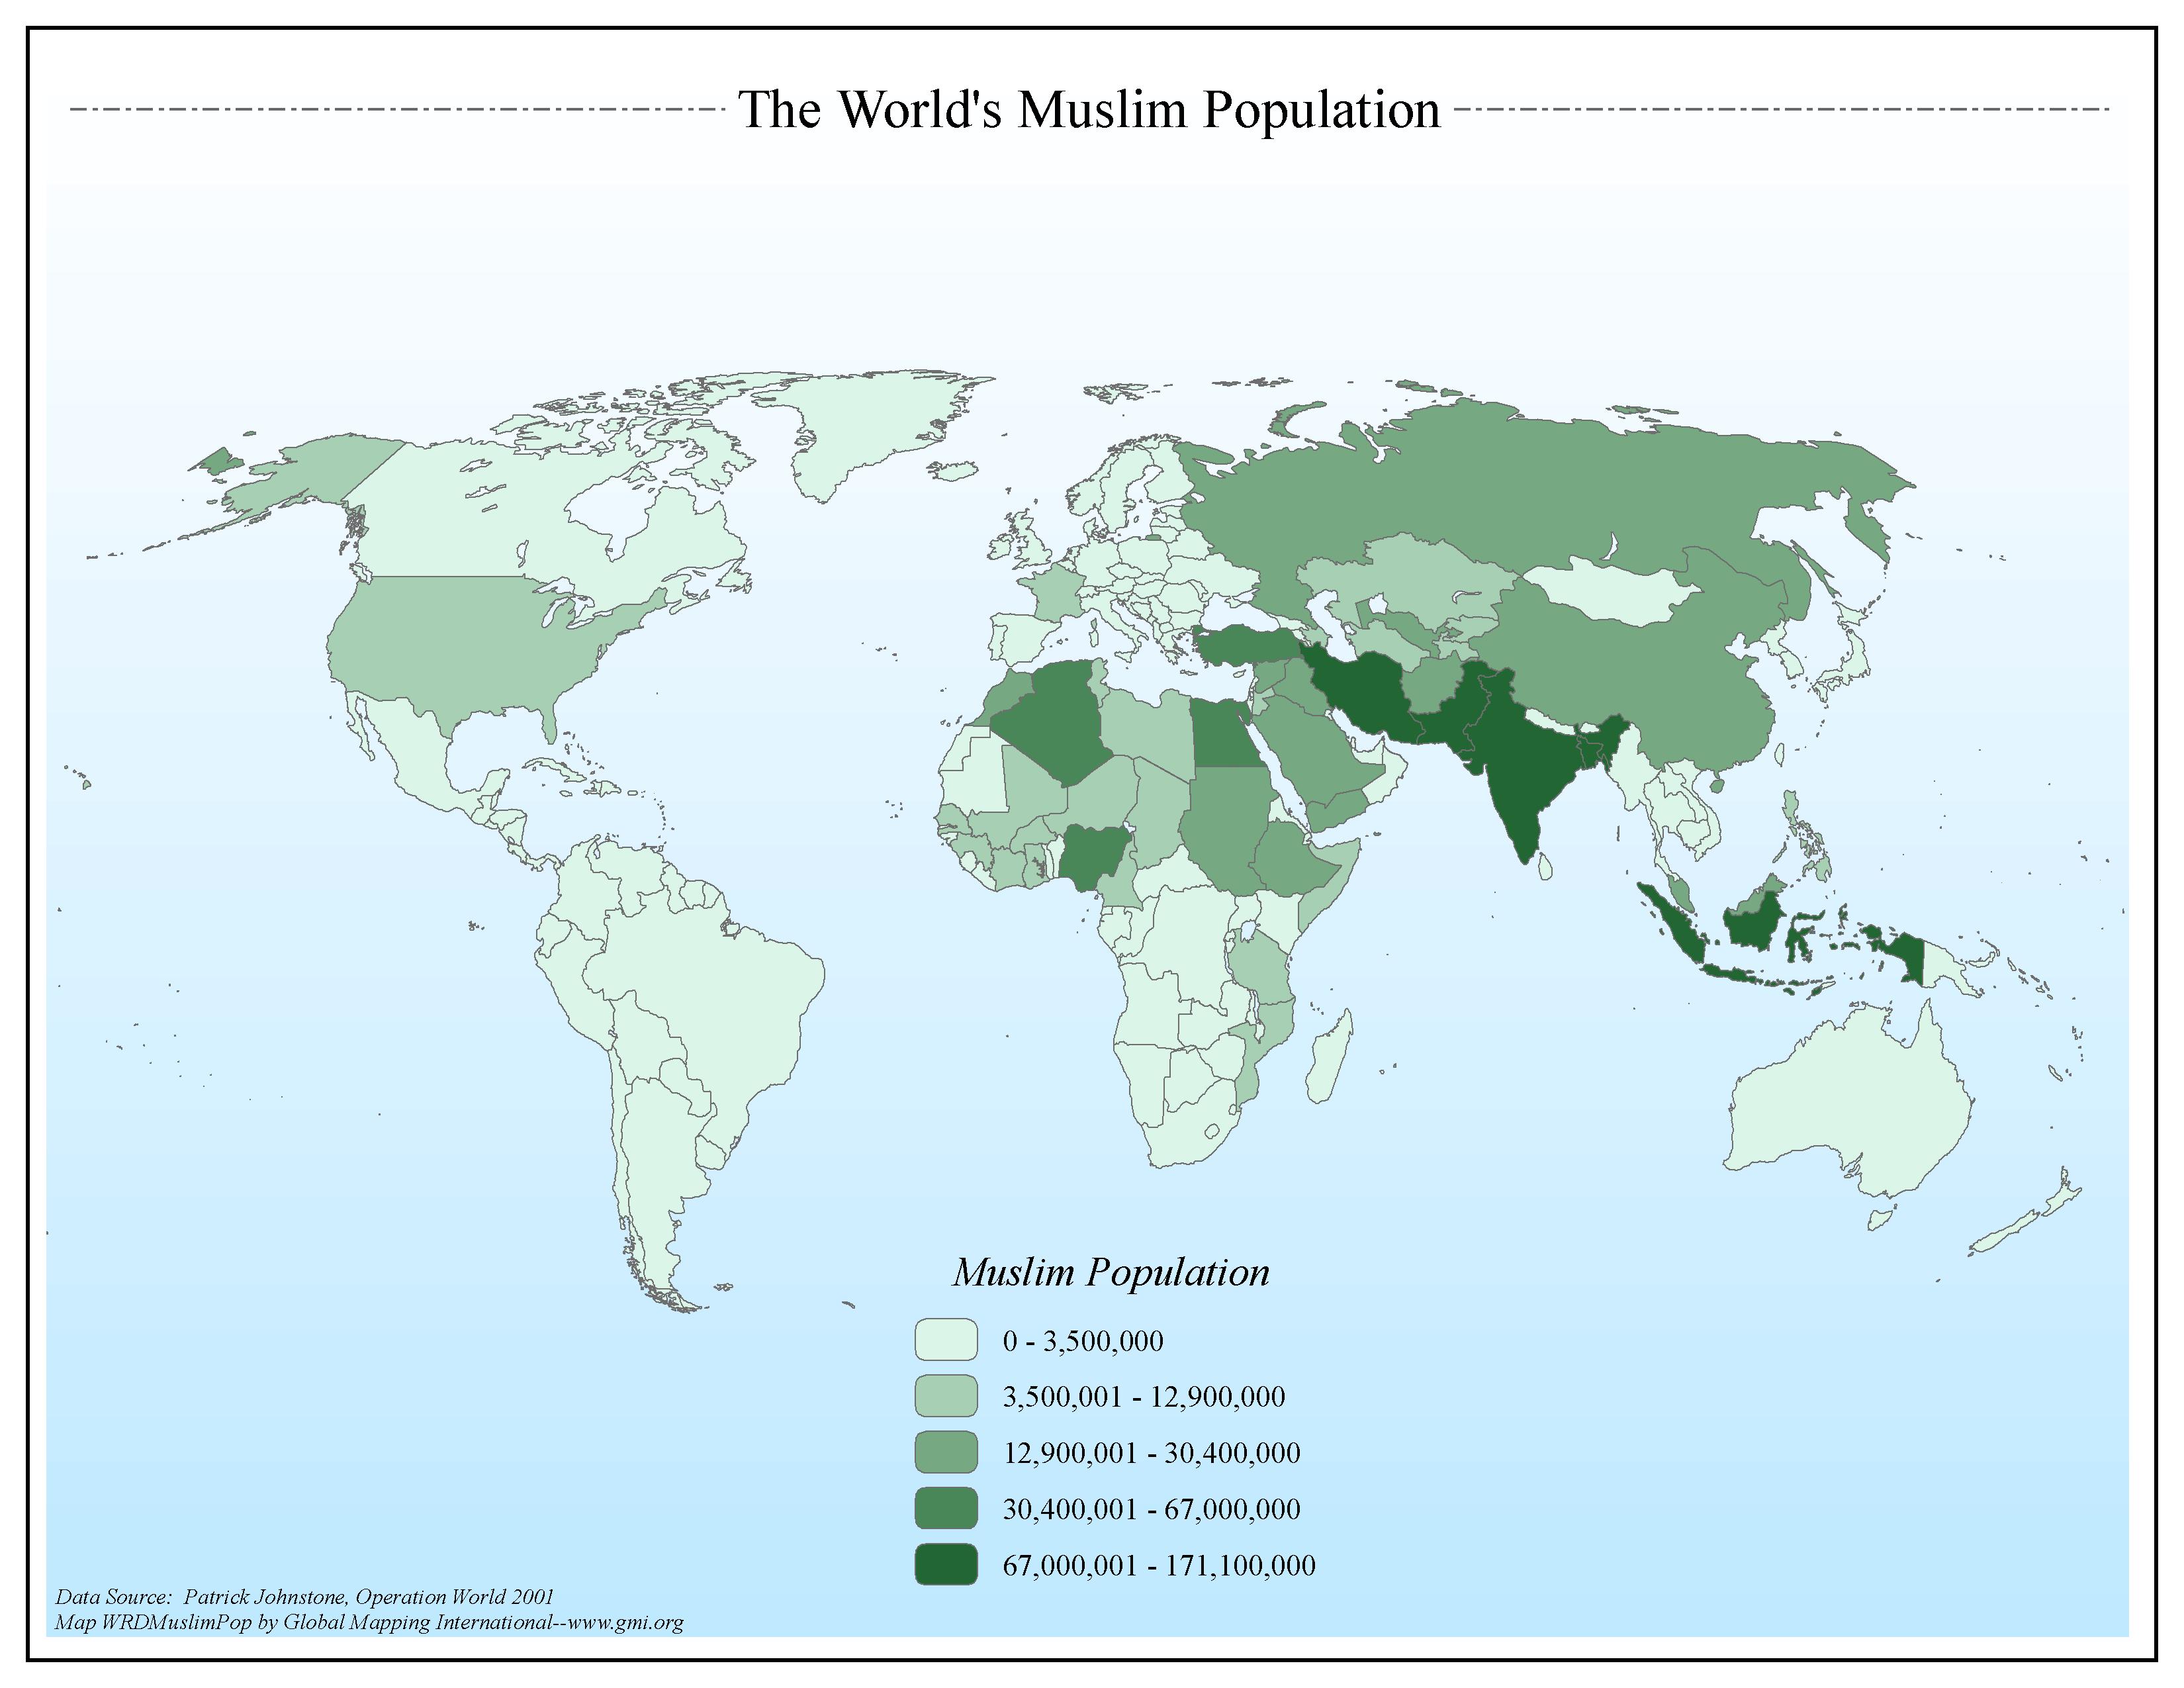 The World's Muslim Population